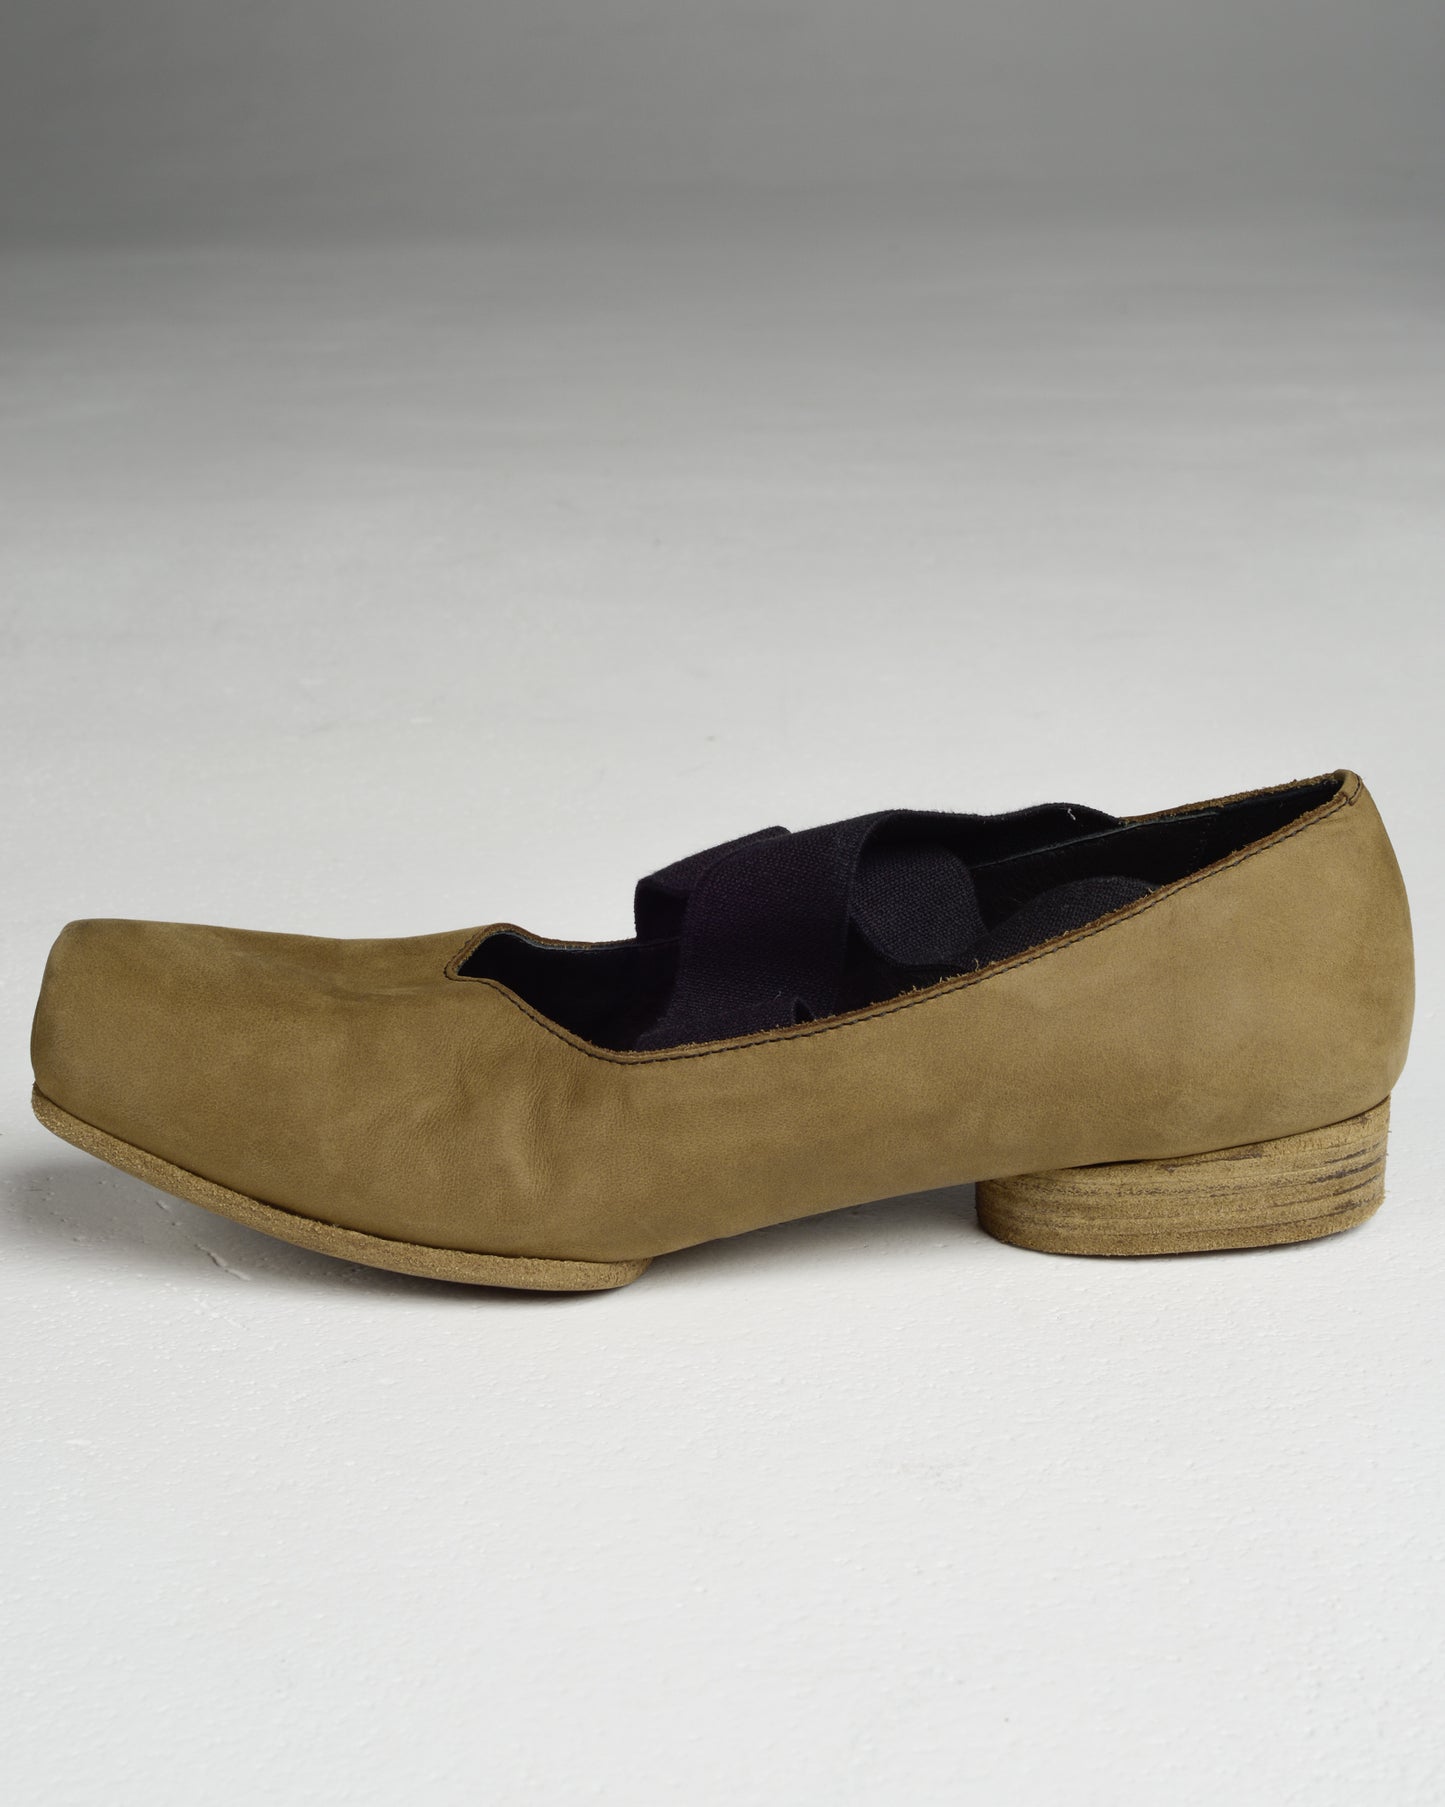 Olive Leather Ballet Shoes